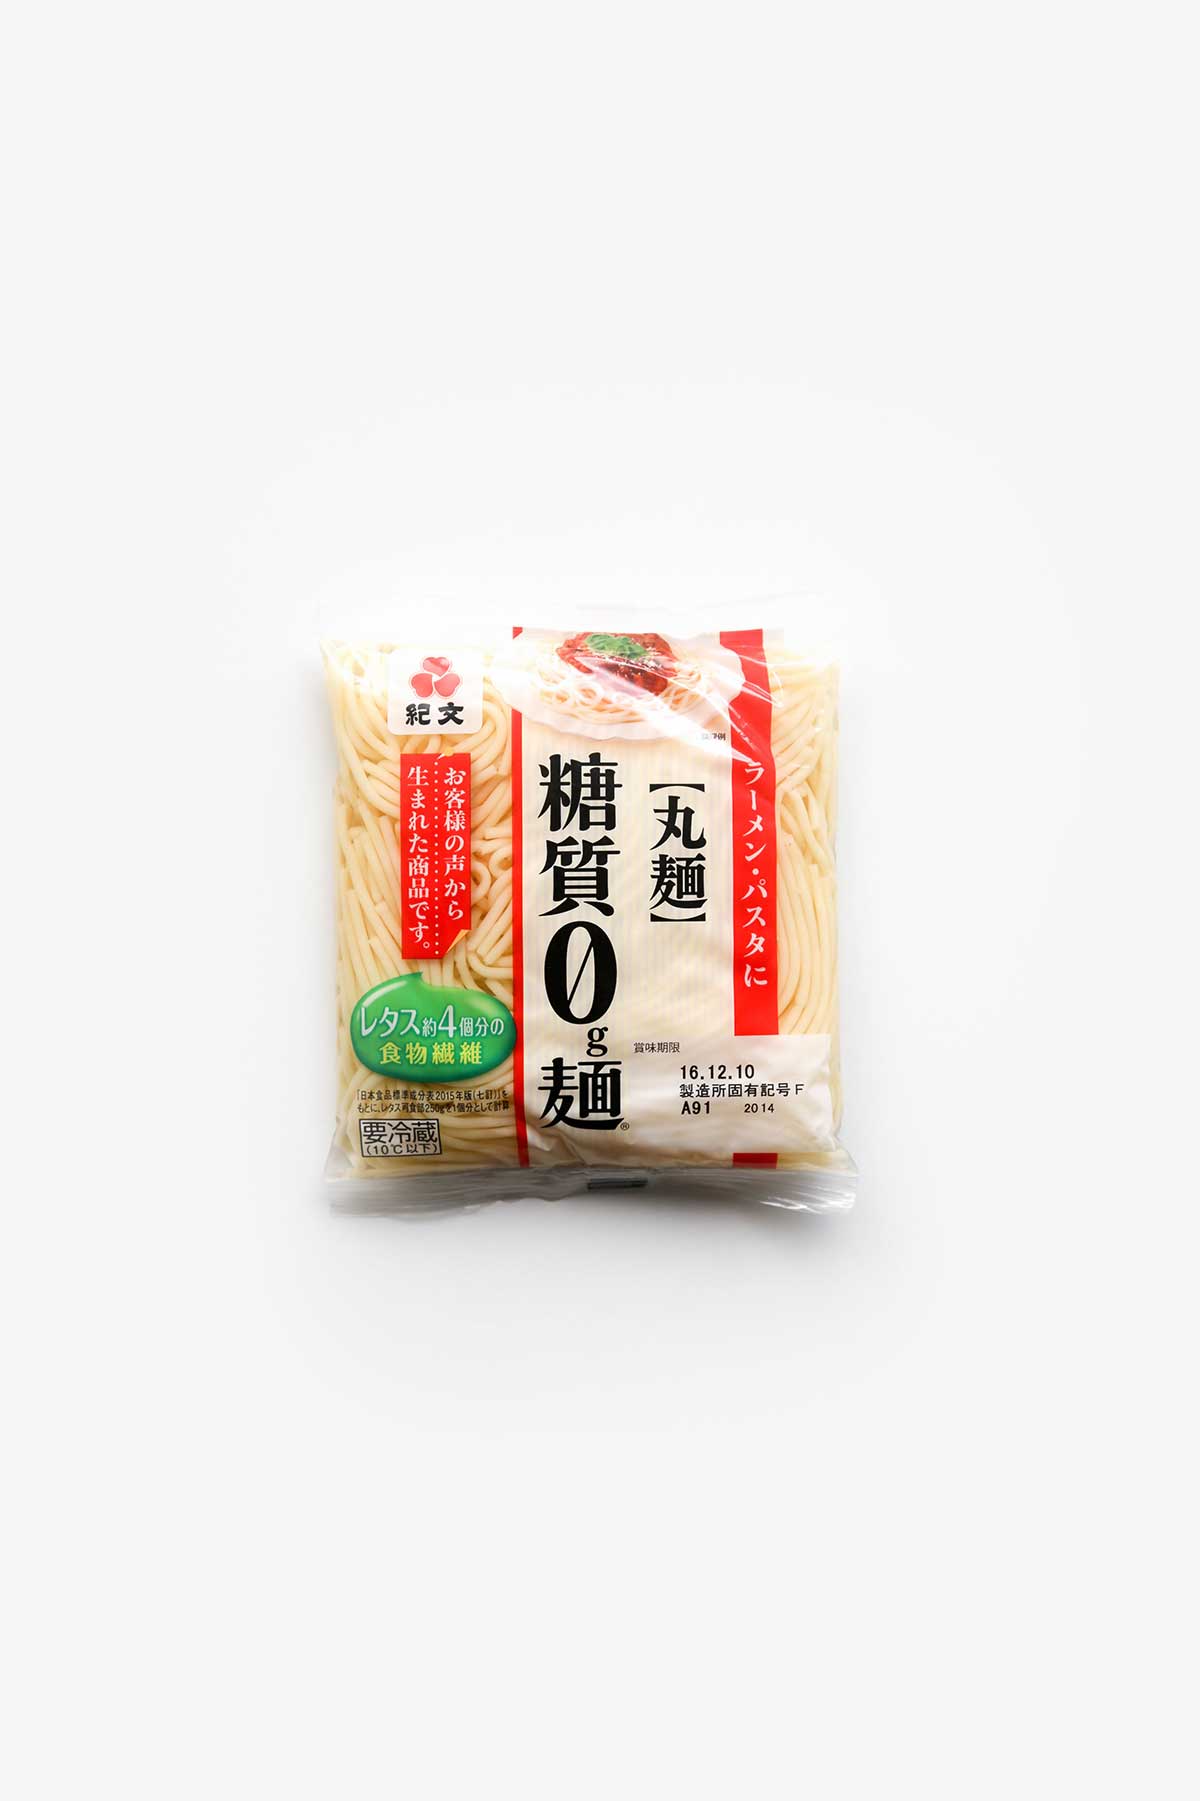 Shirataki Noodles and Keto in Japan, Konnyaku Low Carb Pasta